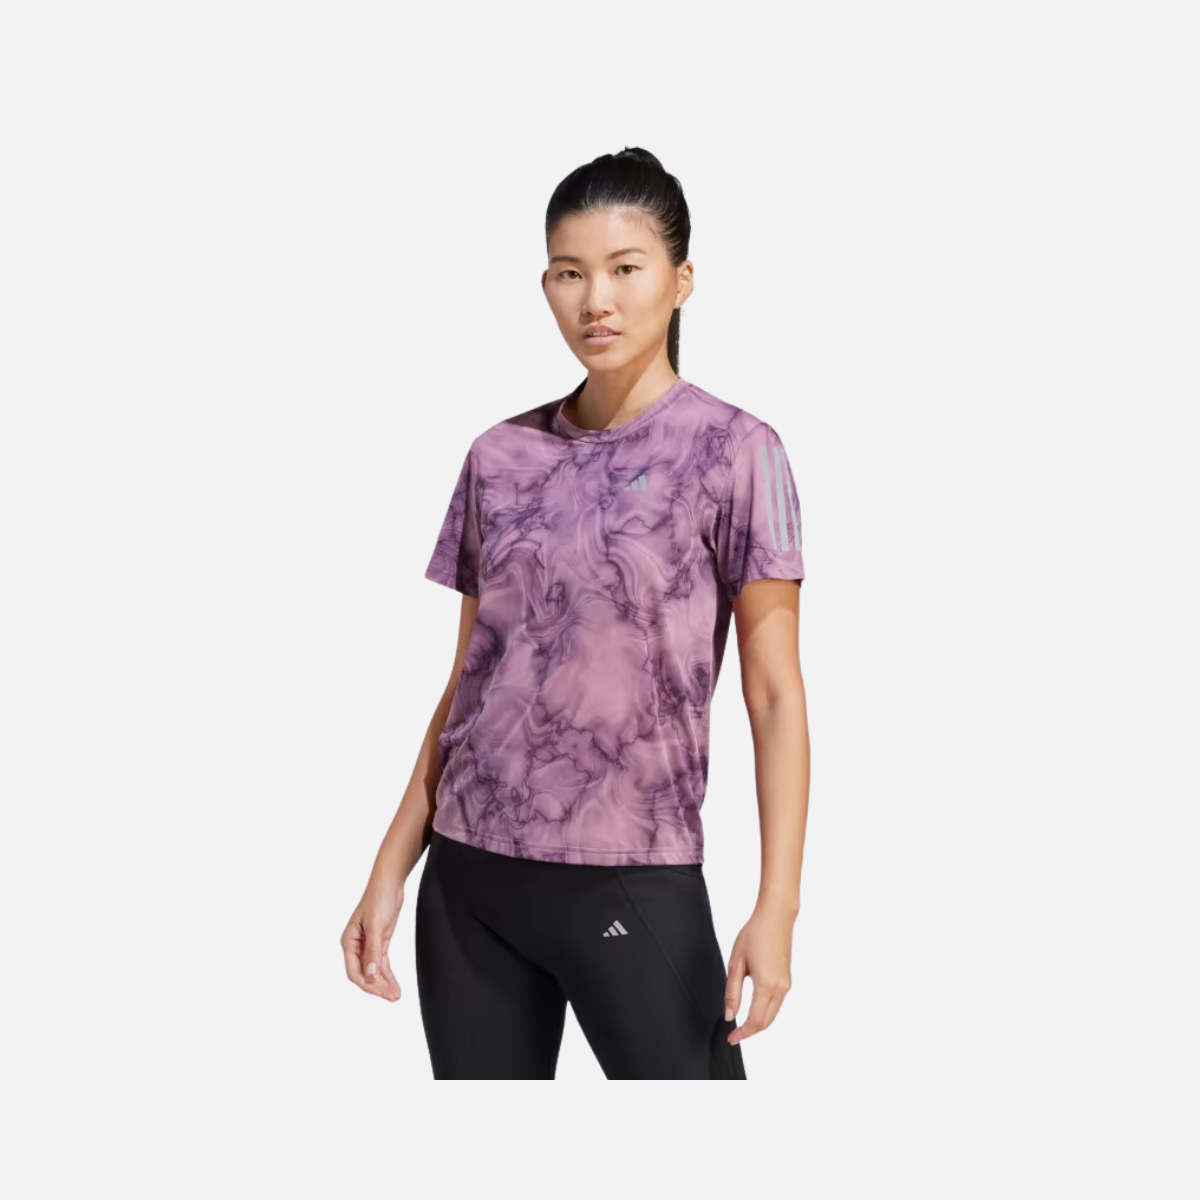 Adidas Own The Run Allover Print Women's Running T-shirt -Wonder Orchid/Black